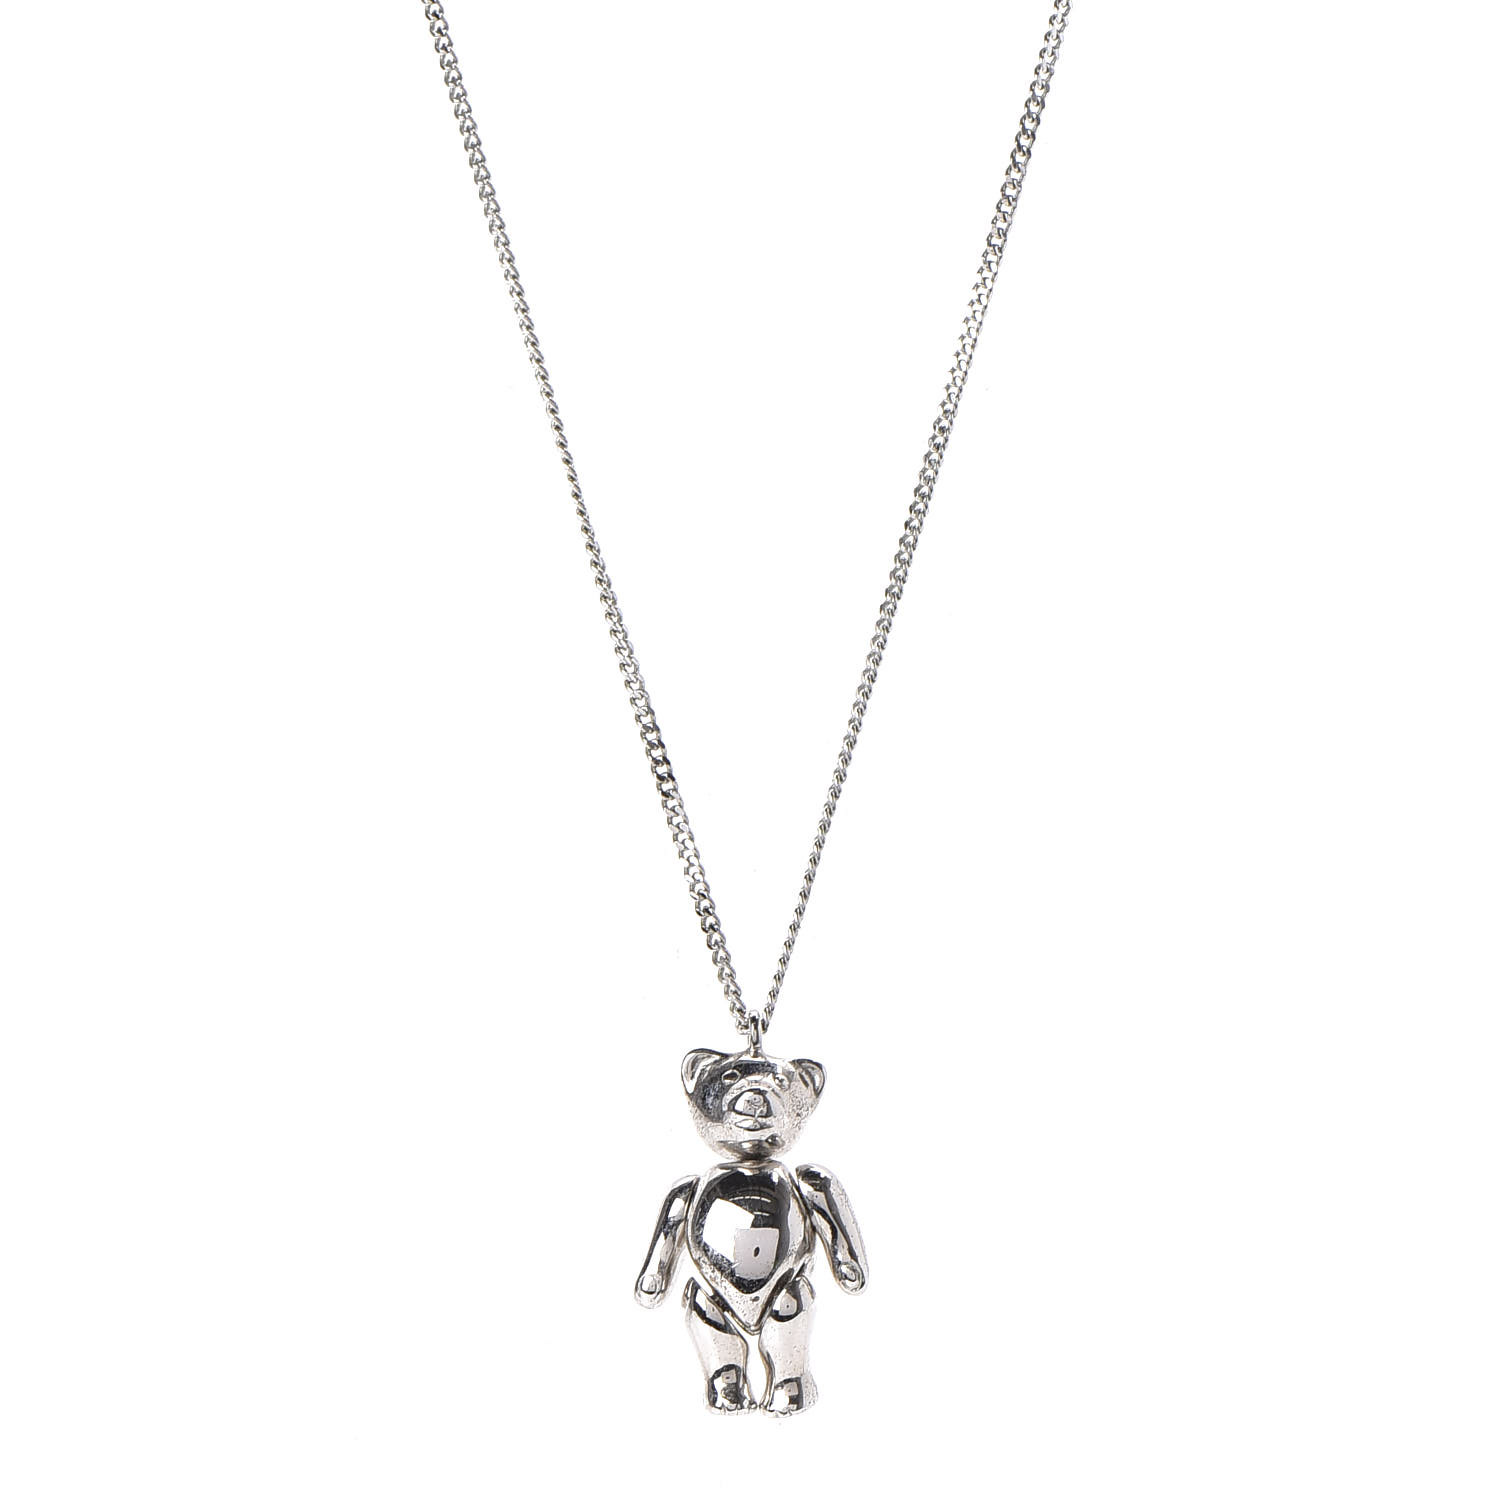 dior teddy bear necklace